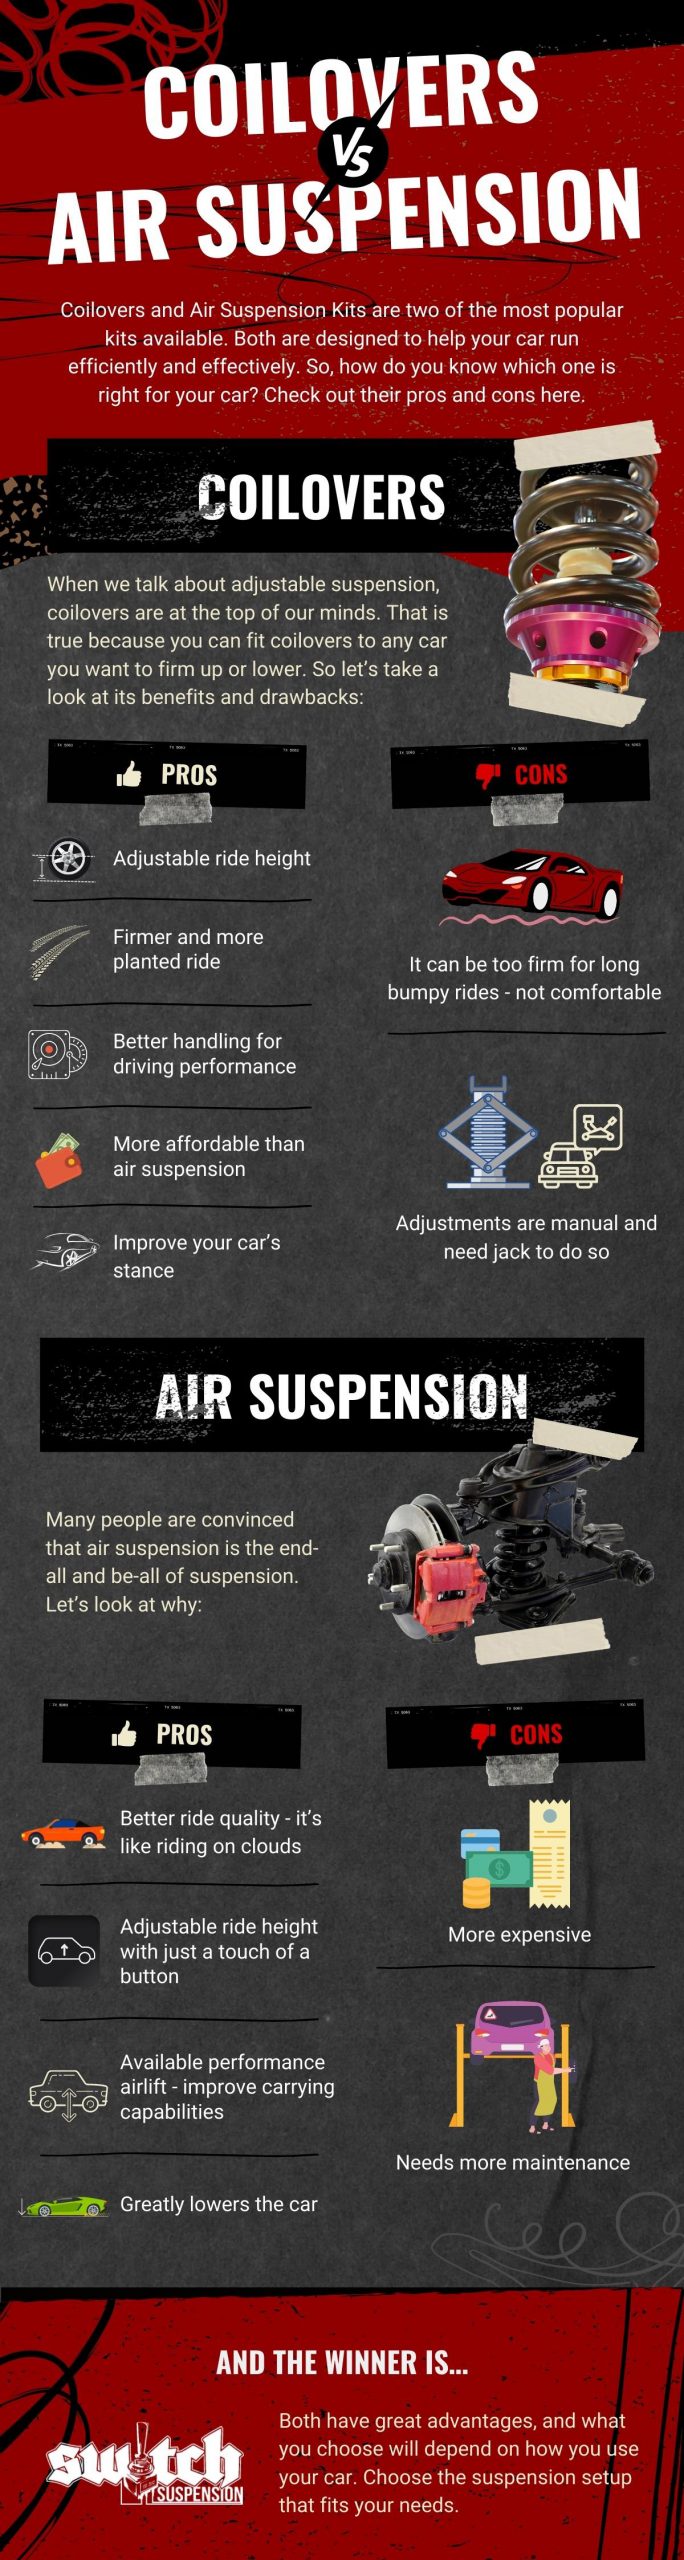 Coilovers vs. Air Suspension